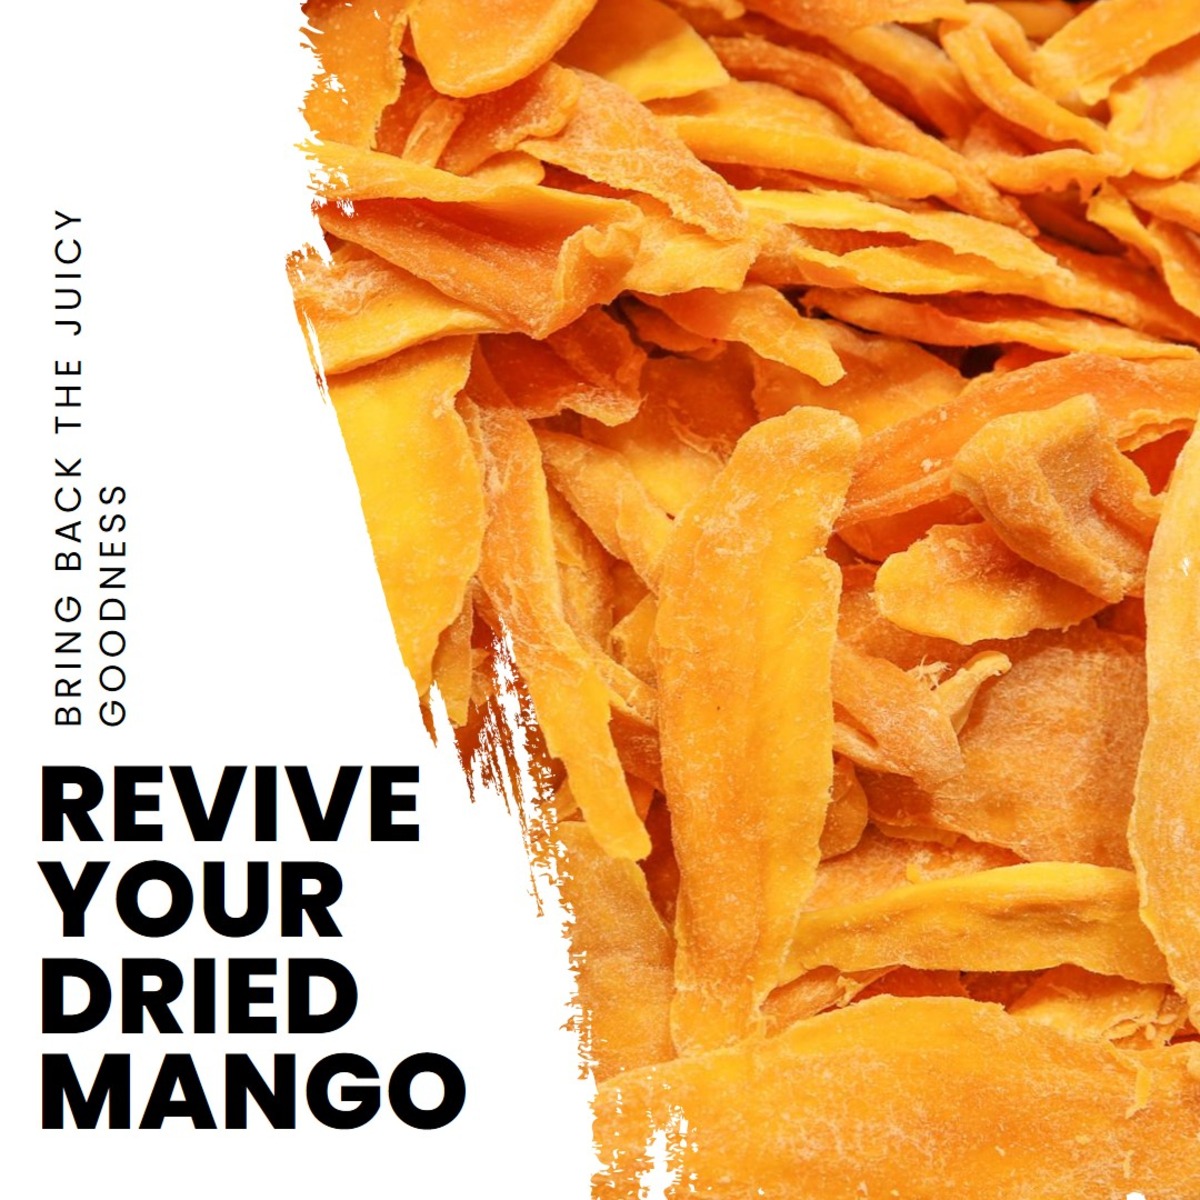 Can You Rehydrate Dried Mango?